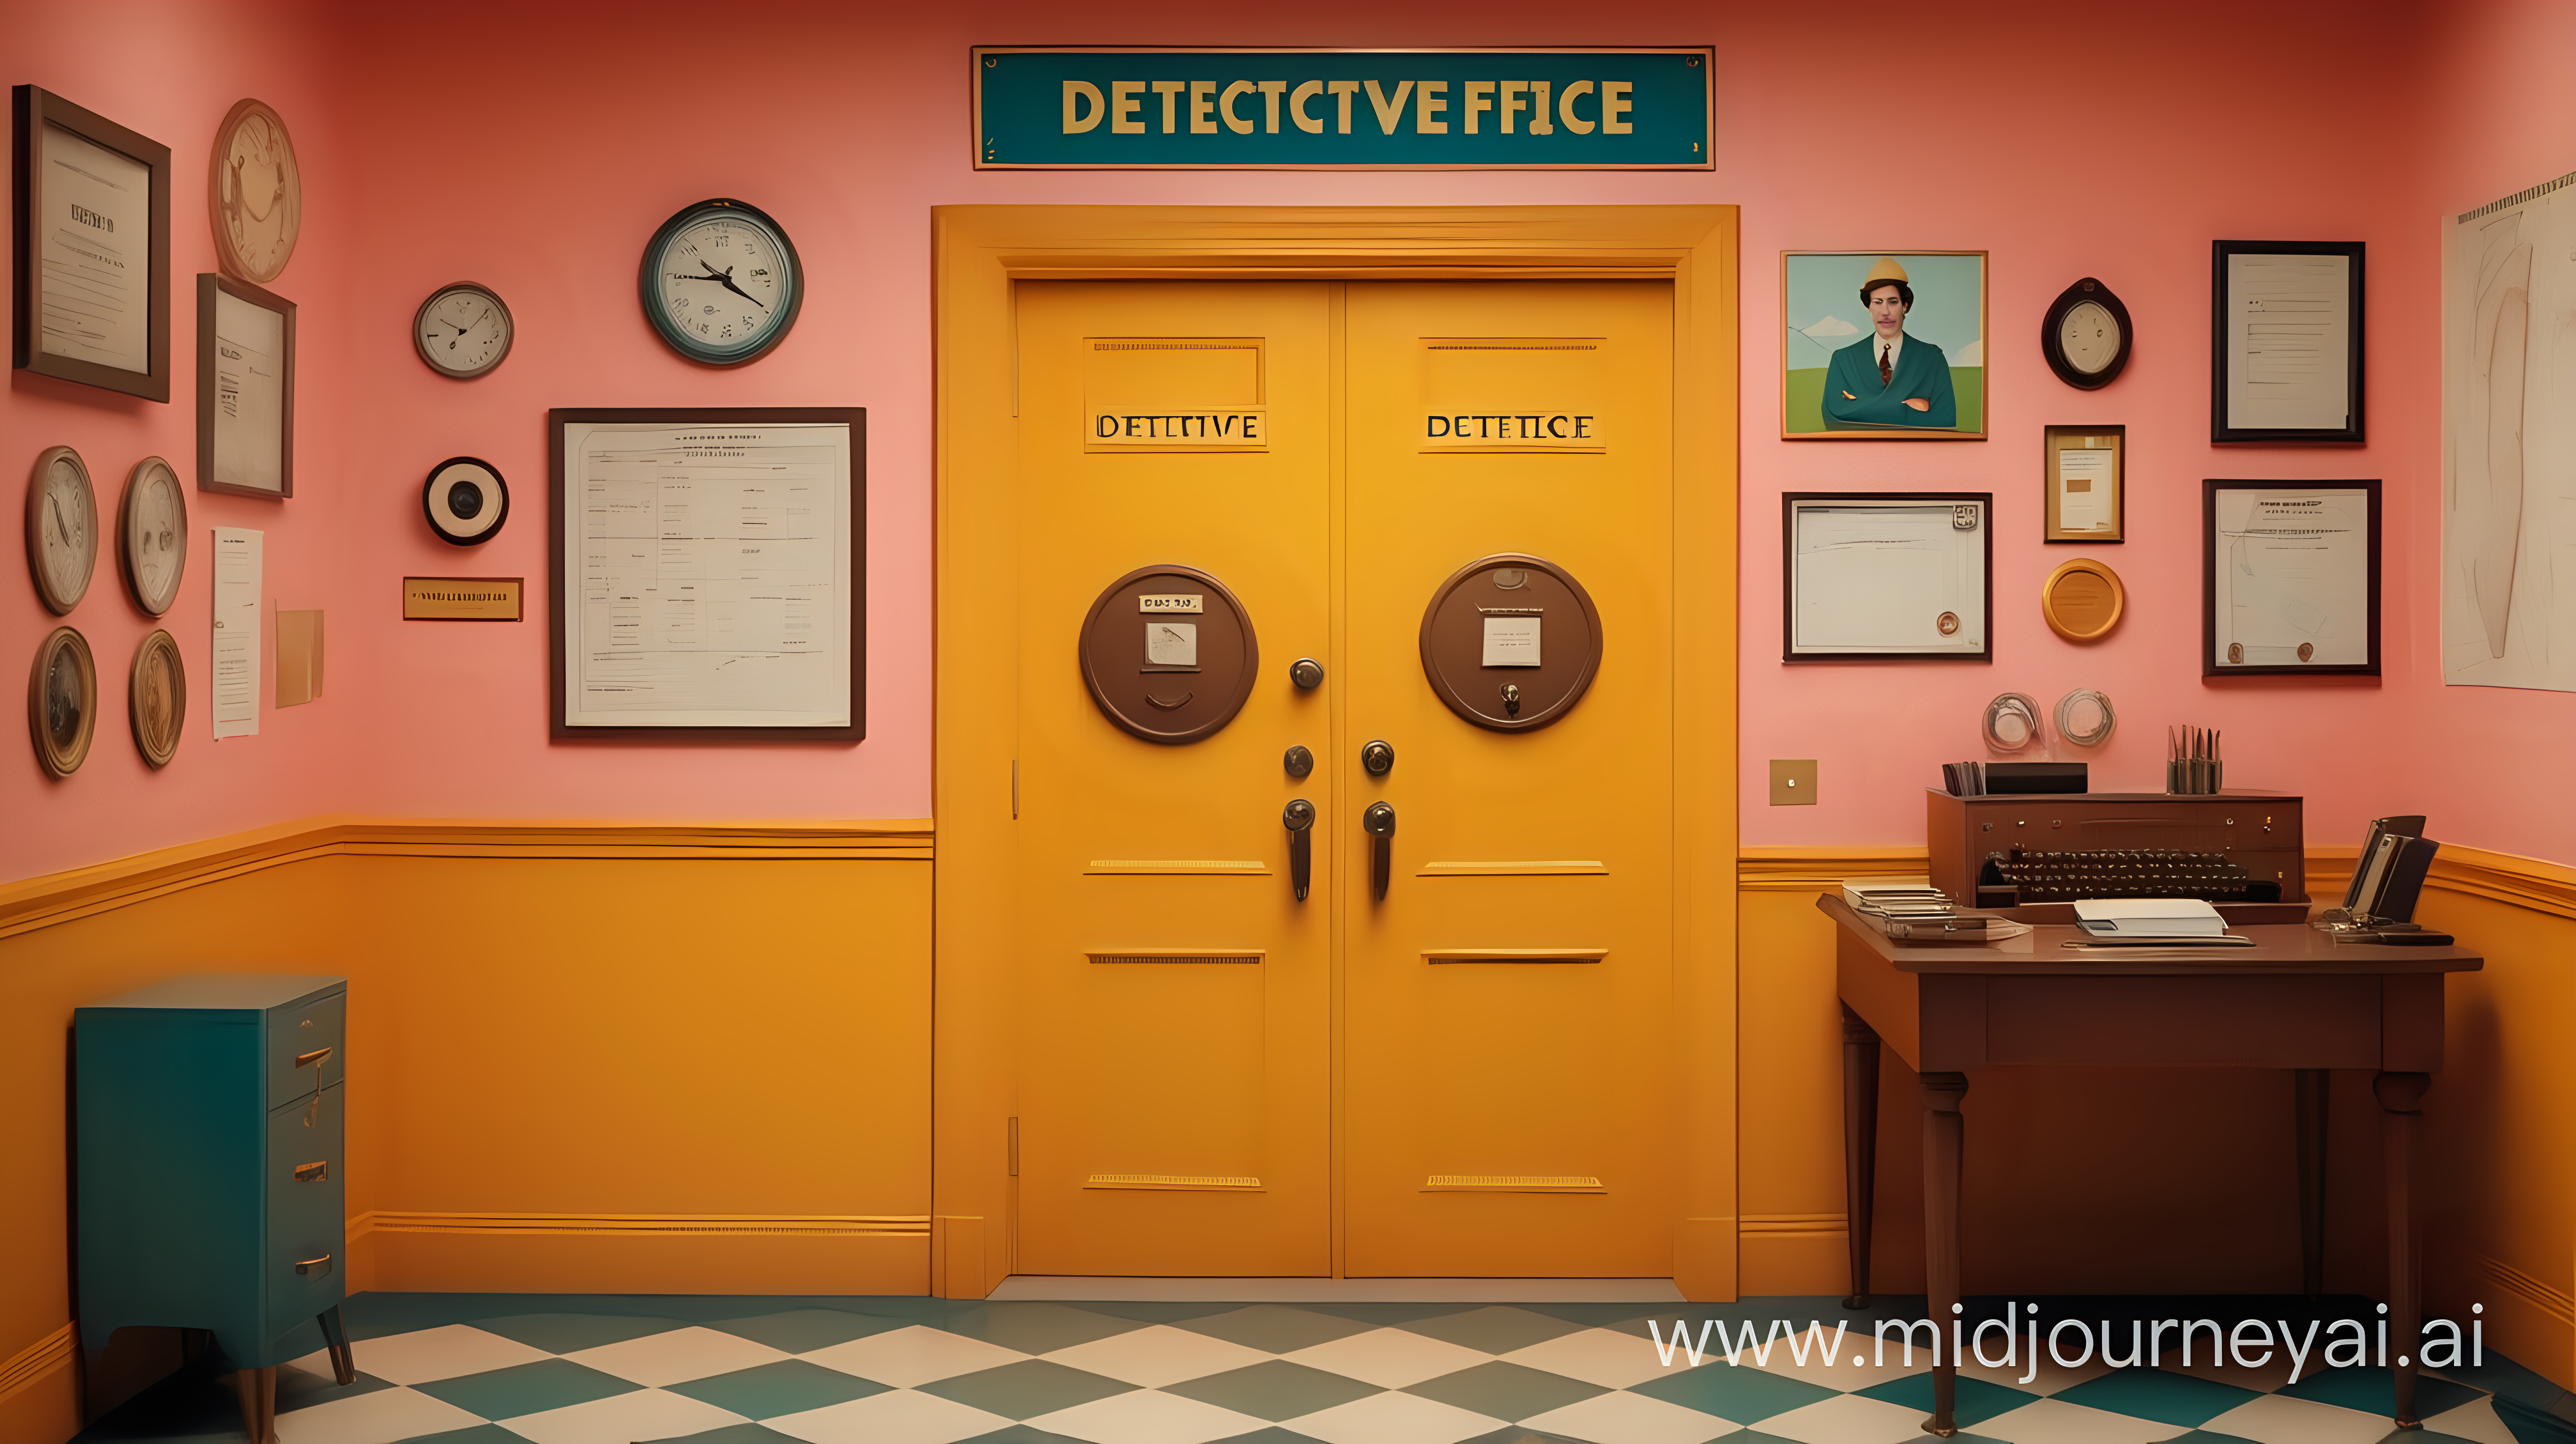 Detective office door in the style of Wes